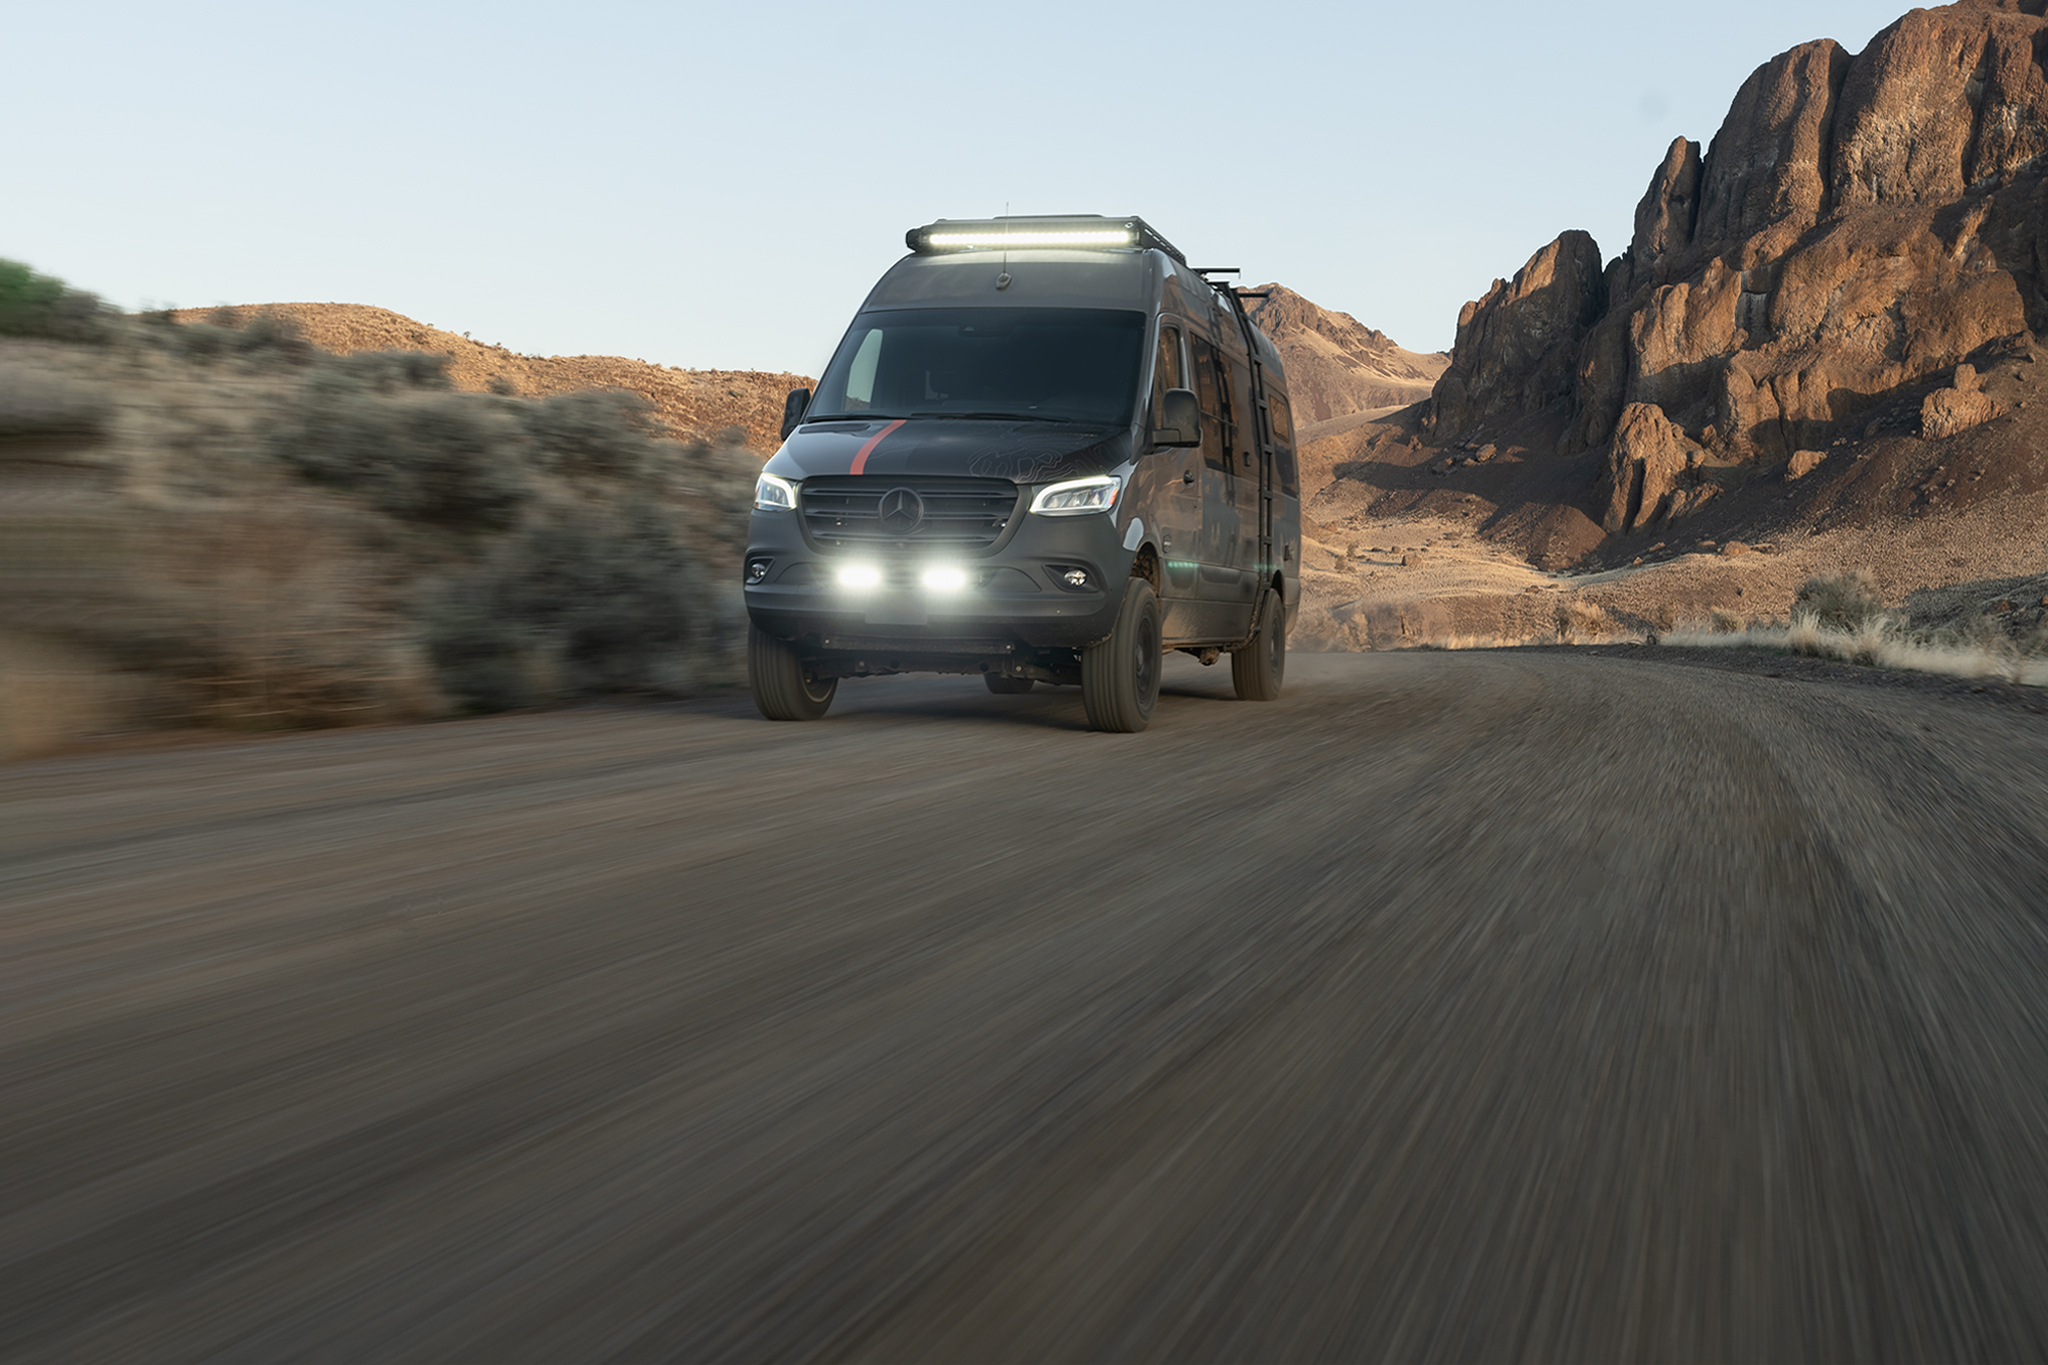 A 4x4 Sprinter adventure van drives along an off-road trail through a gulch. Its light bars illuminate the road.